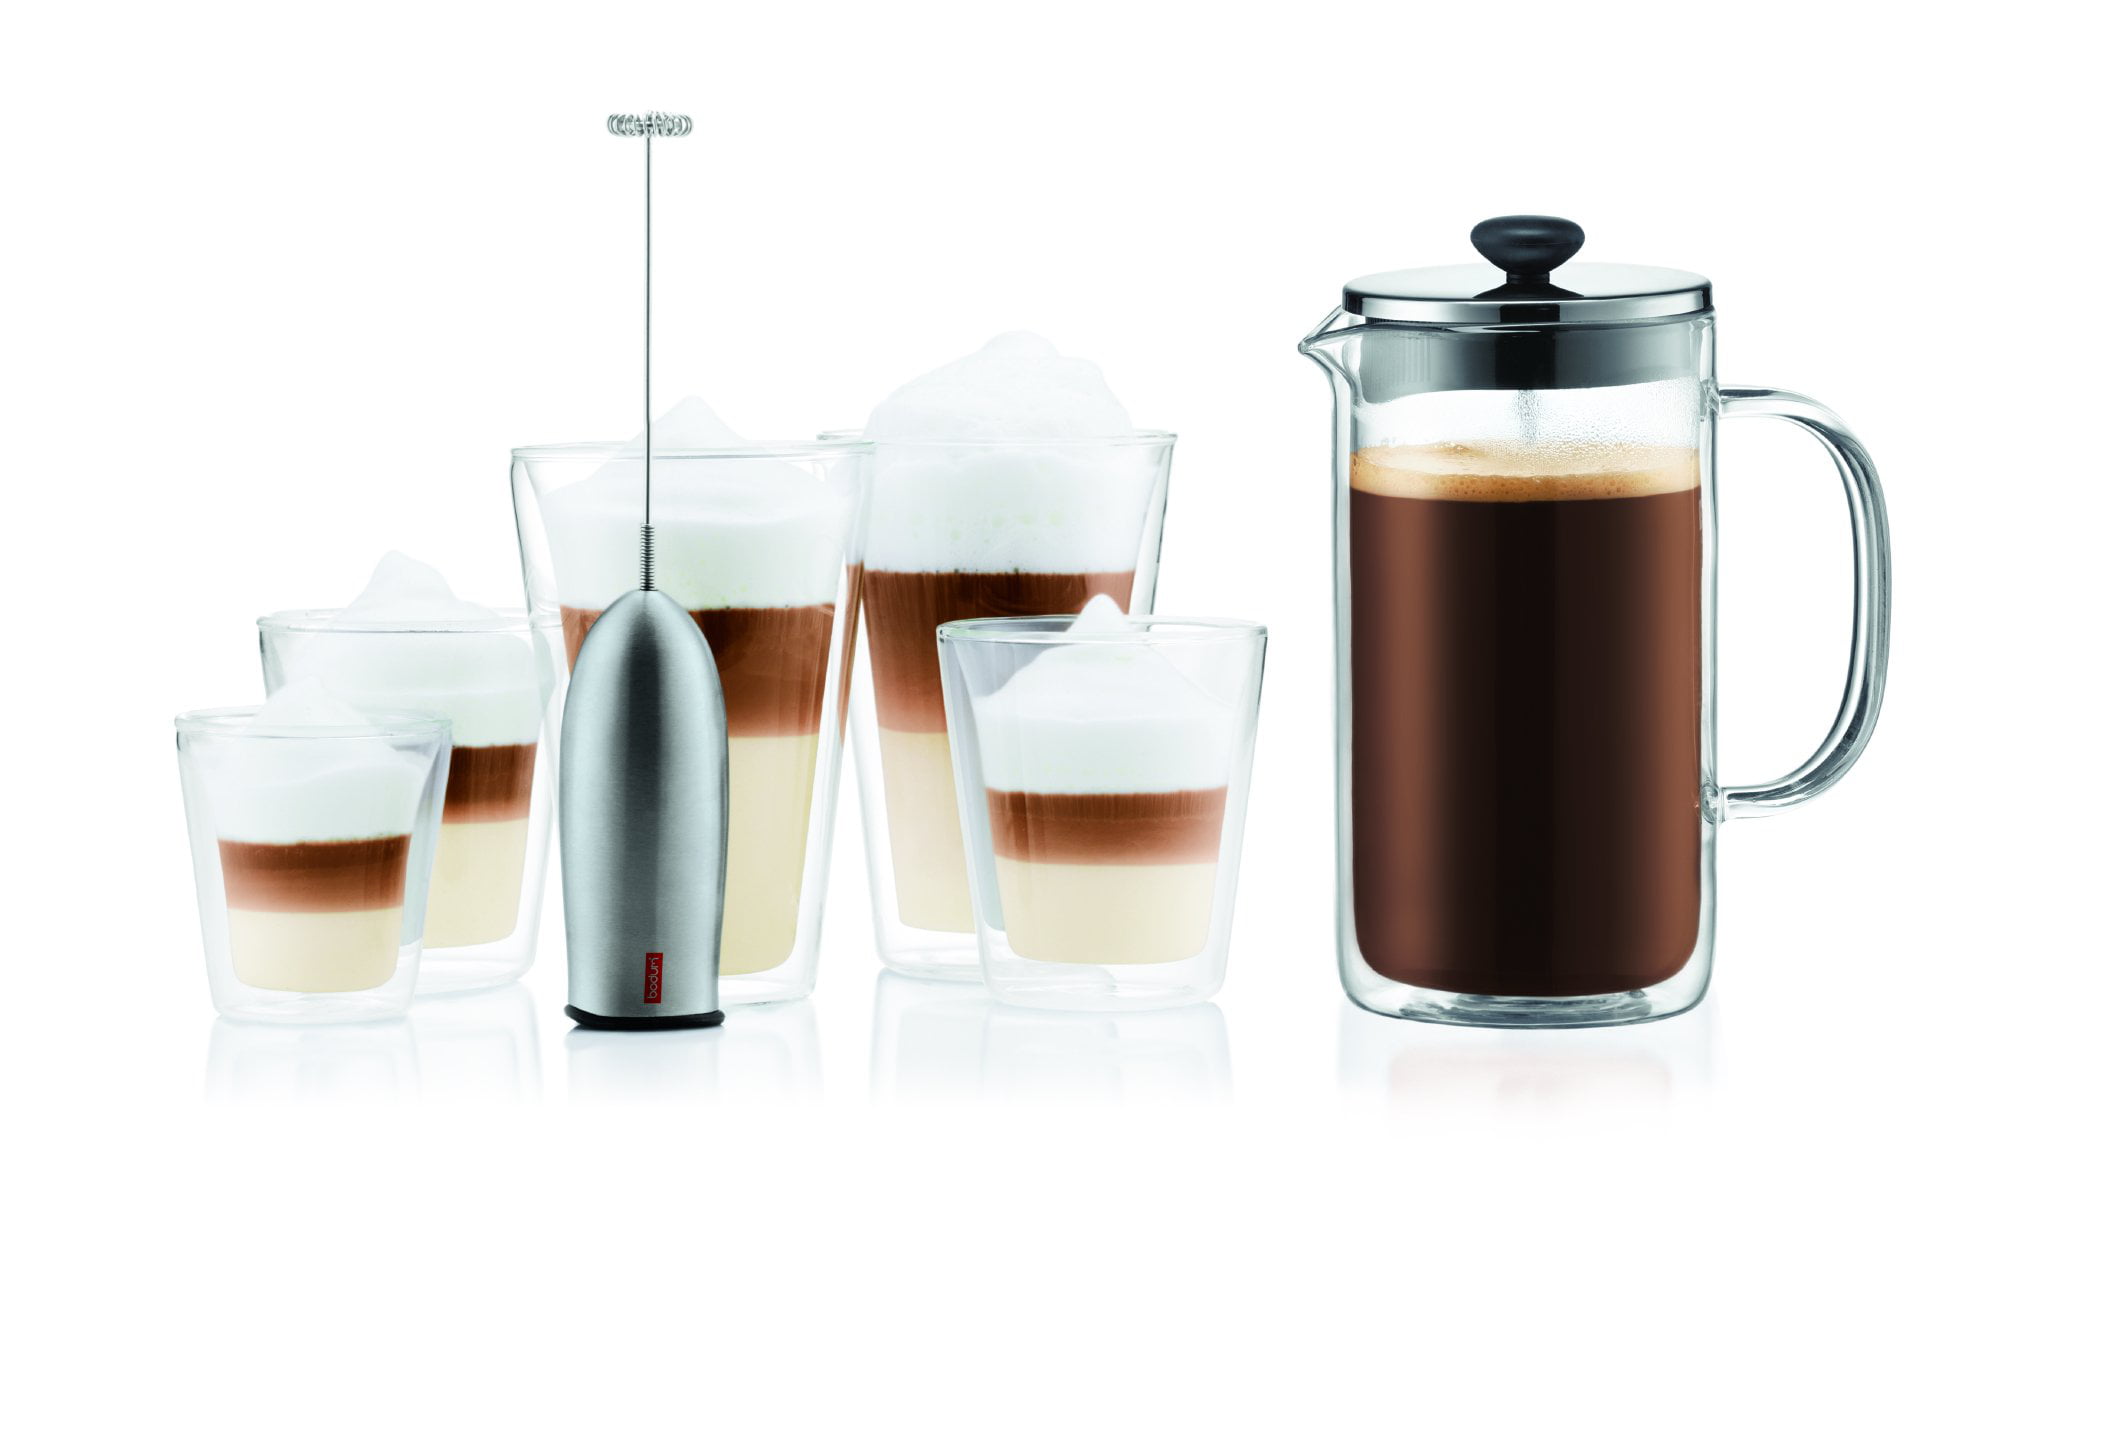 Elixir Glassware Large Coffee Mugs Double Wall Glass Set of 2 16 oz Dishwasher Microwave